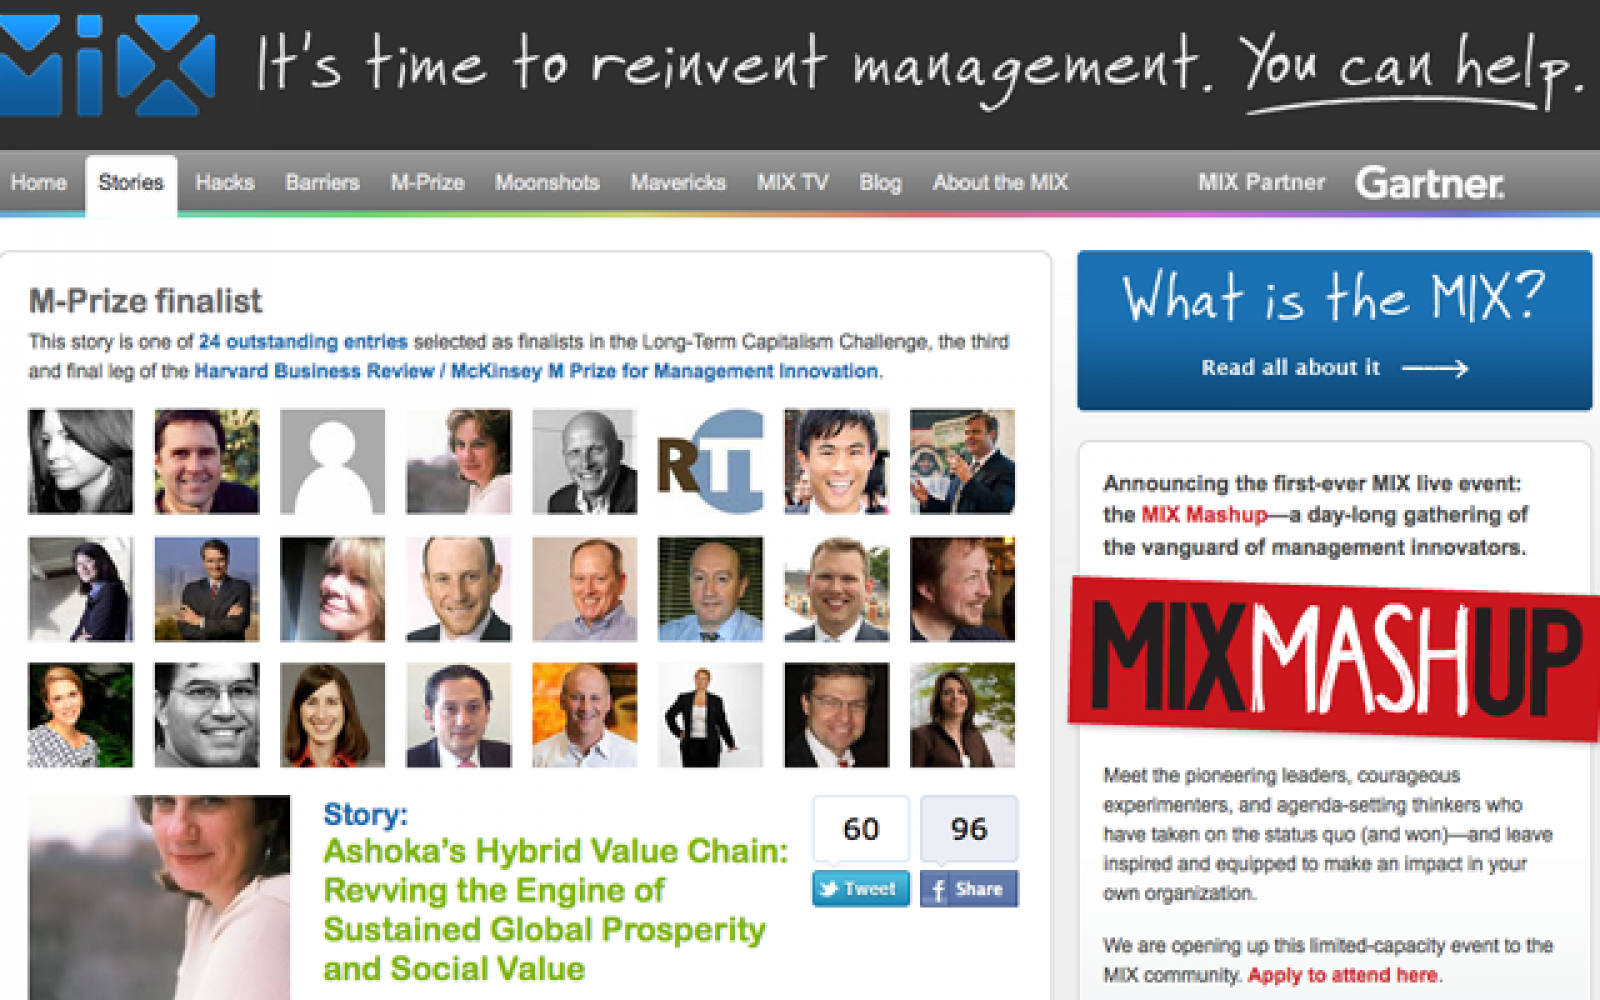 Reinvent Management